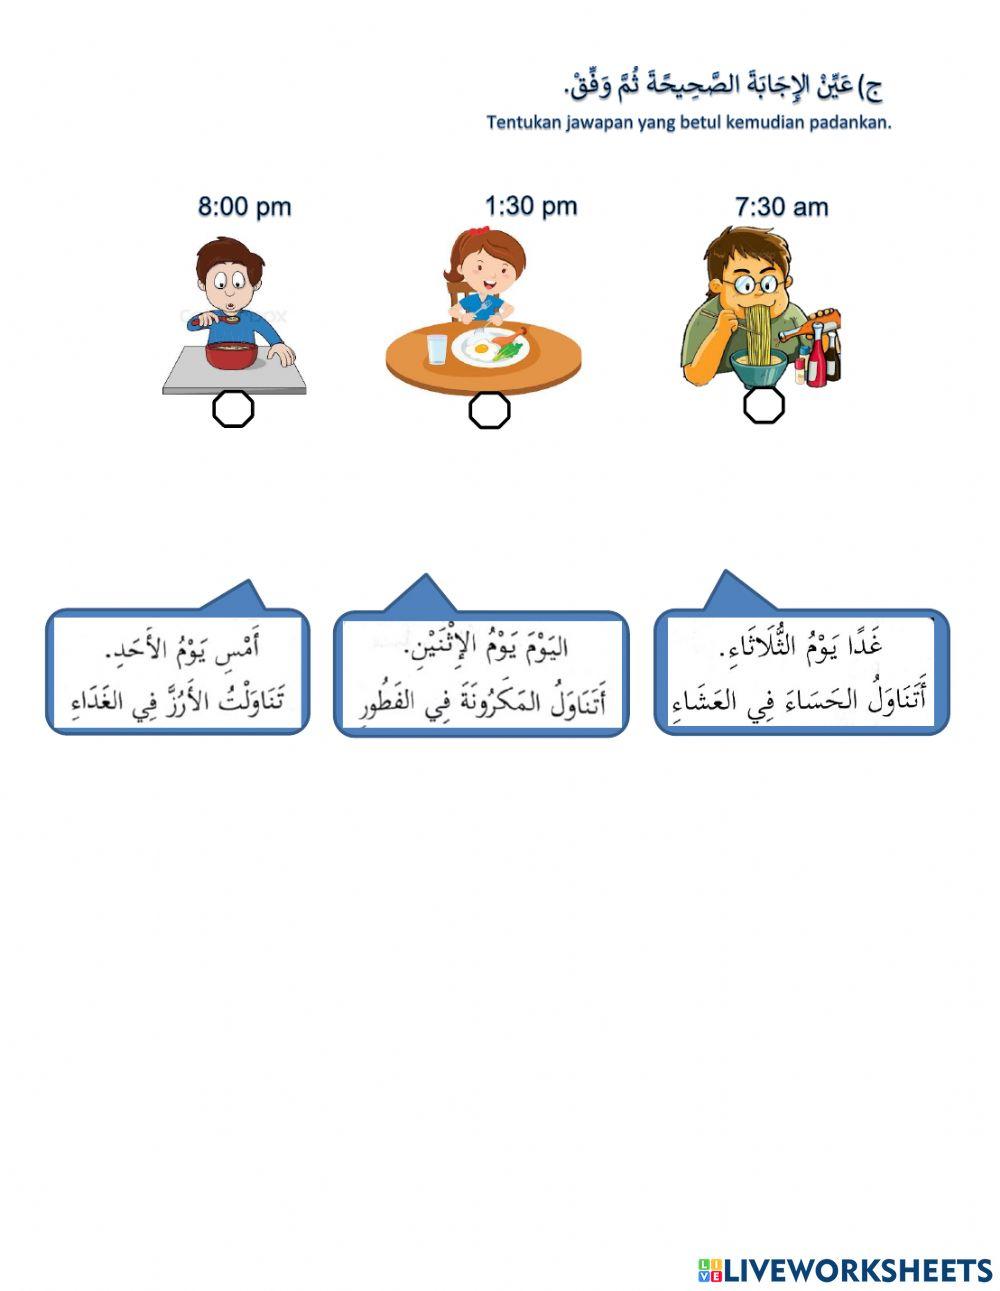 Latihan bahasa arab tahun 3 waktu makan